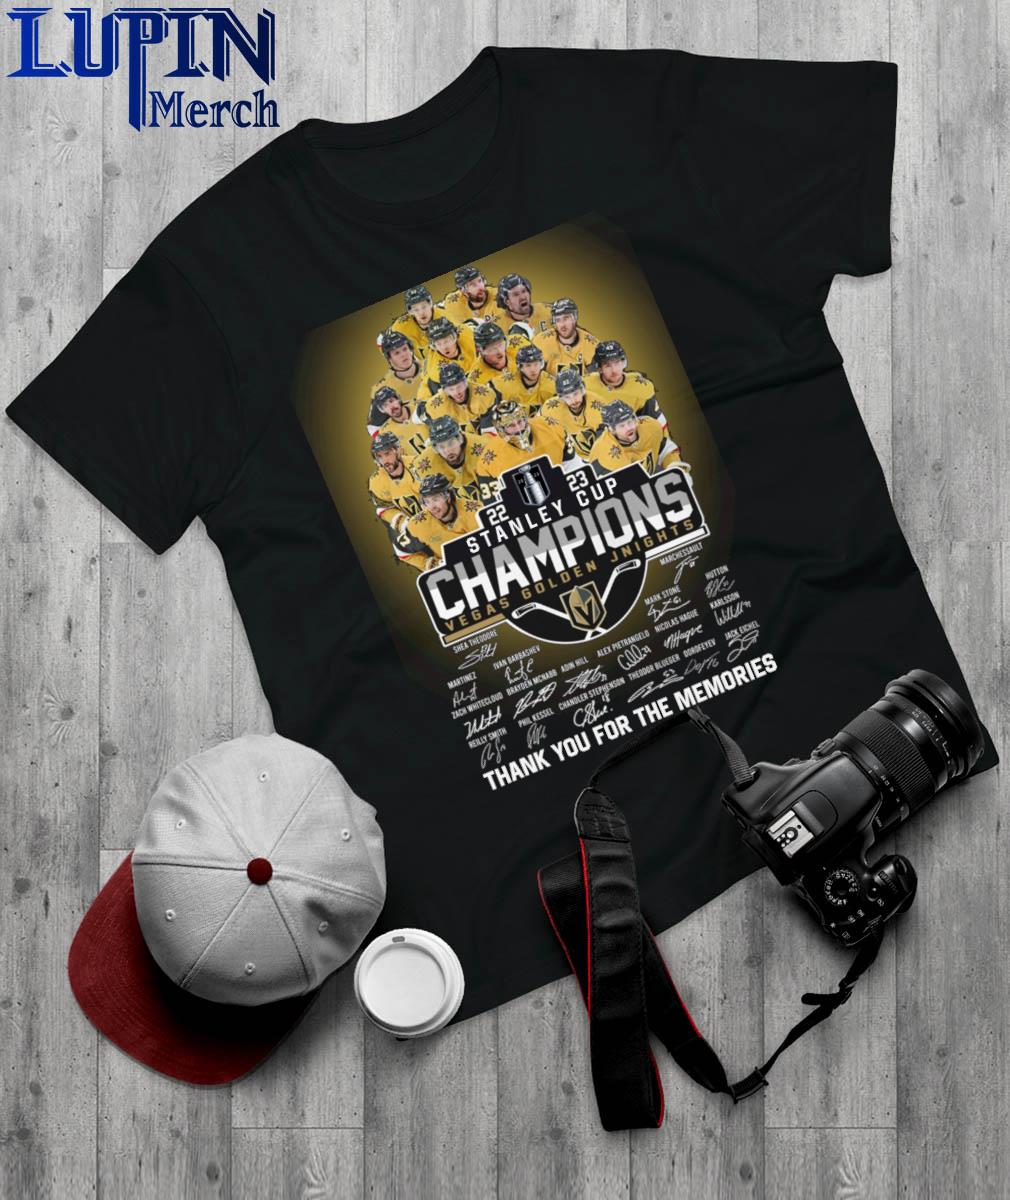 Official 2022 Champion Golden State Warriors Fanatics Branded 2022 NBA Finals  Champions Caricature Shirt, hoodie, longsleeve, sweatshirt, v-neck tee